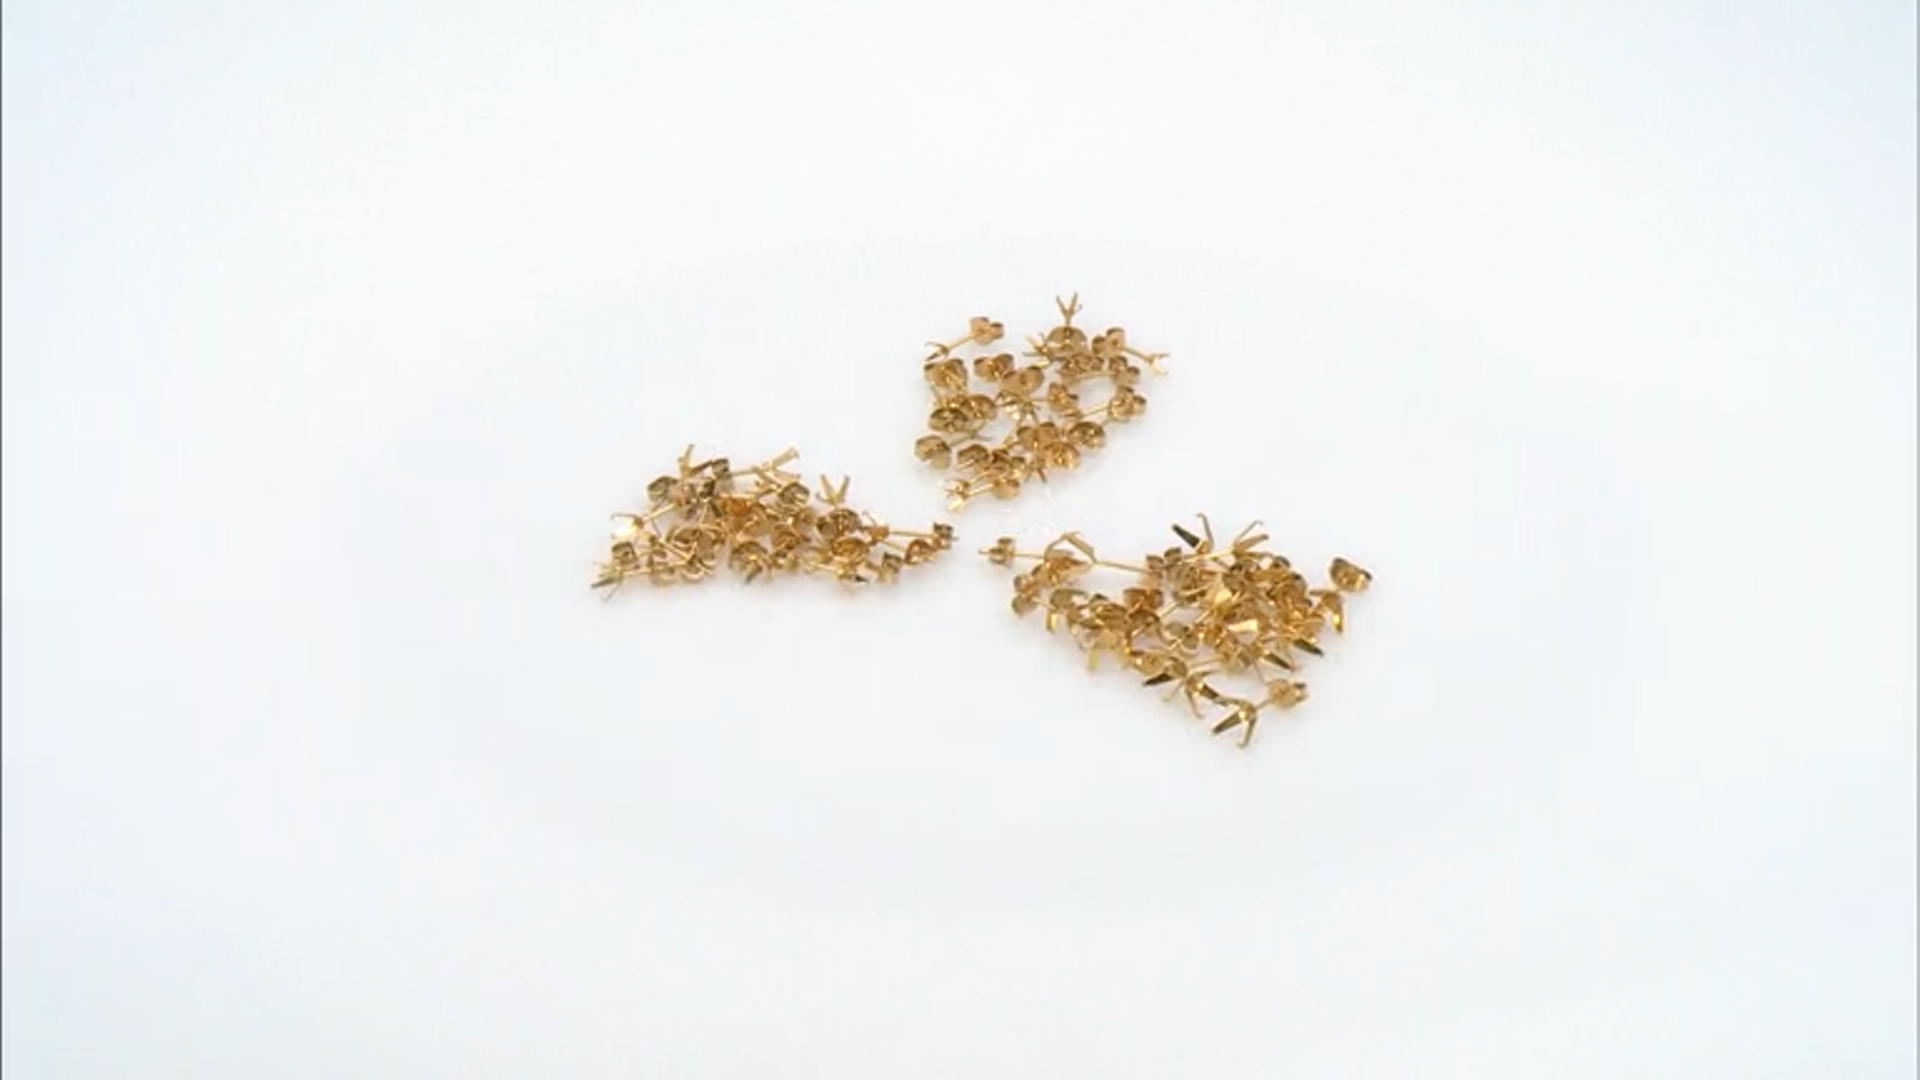 18k Gold Over Stainless Steel 4 Prong Earring Backing in 3 Sizes and Butterfly  Earring Backs - JMKIT498